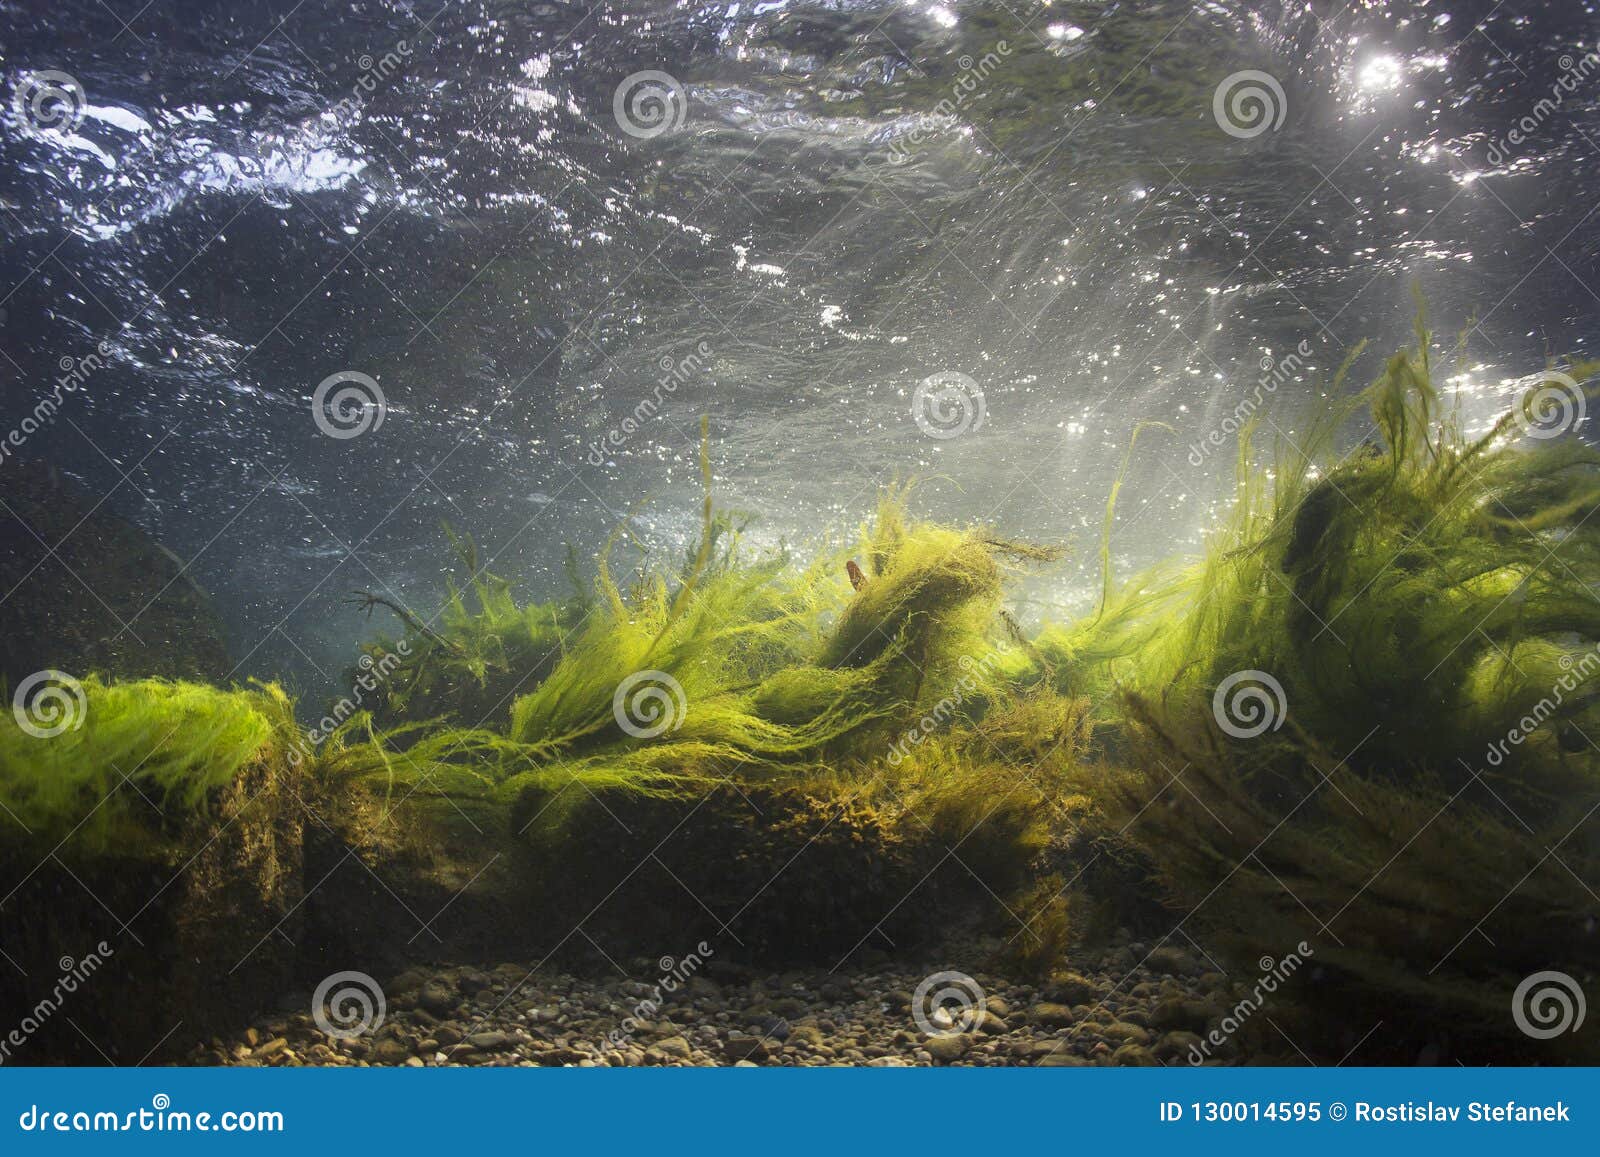 underwater scenery, underwater river habitat